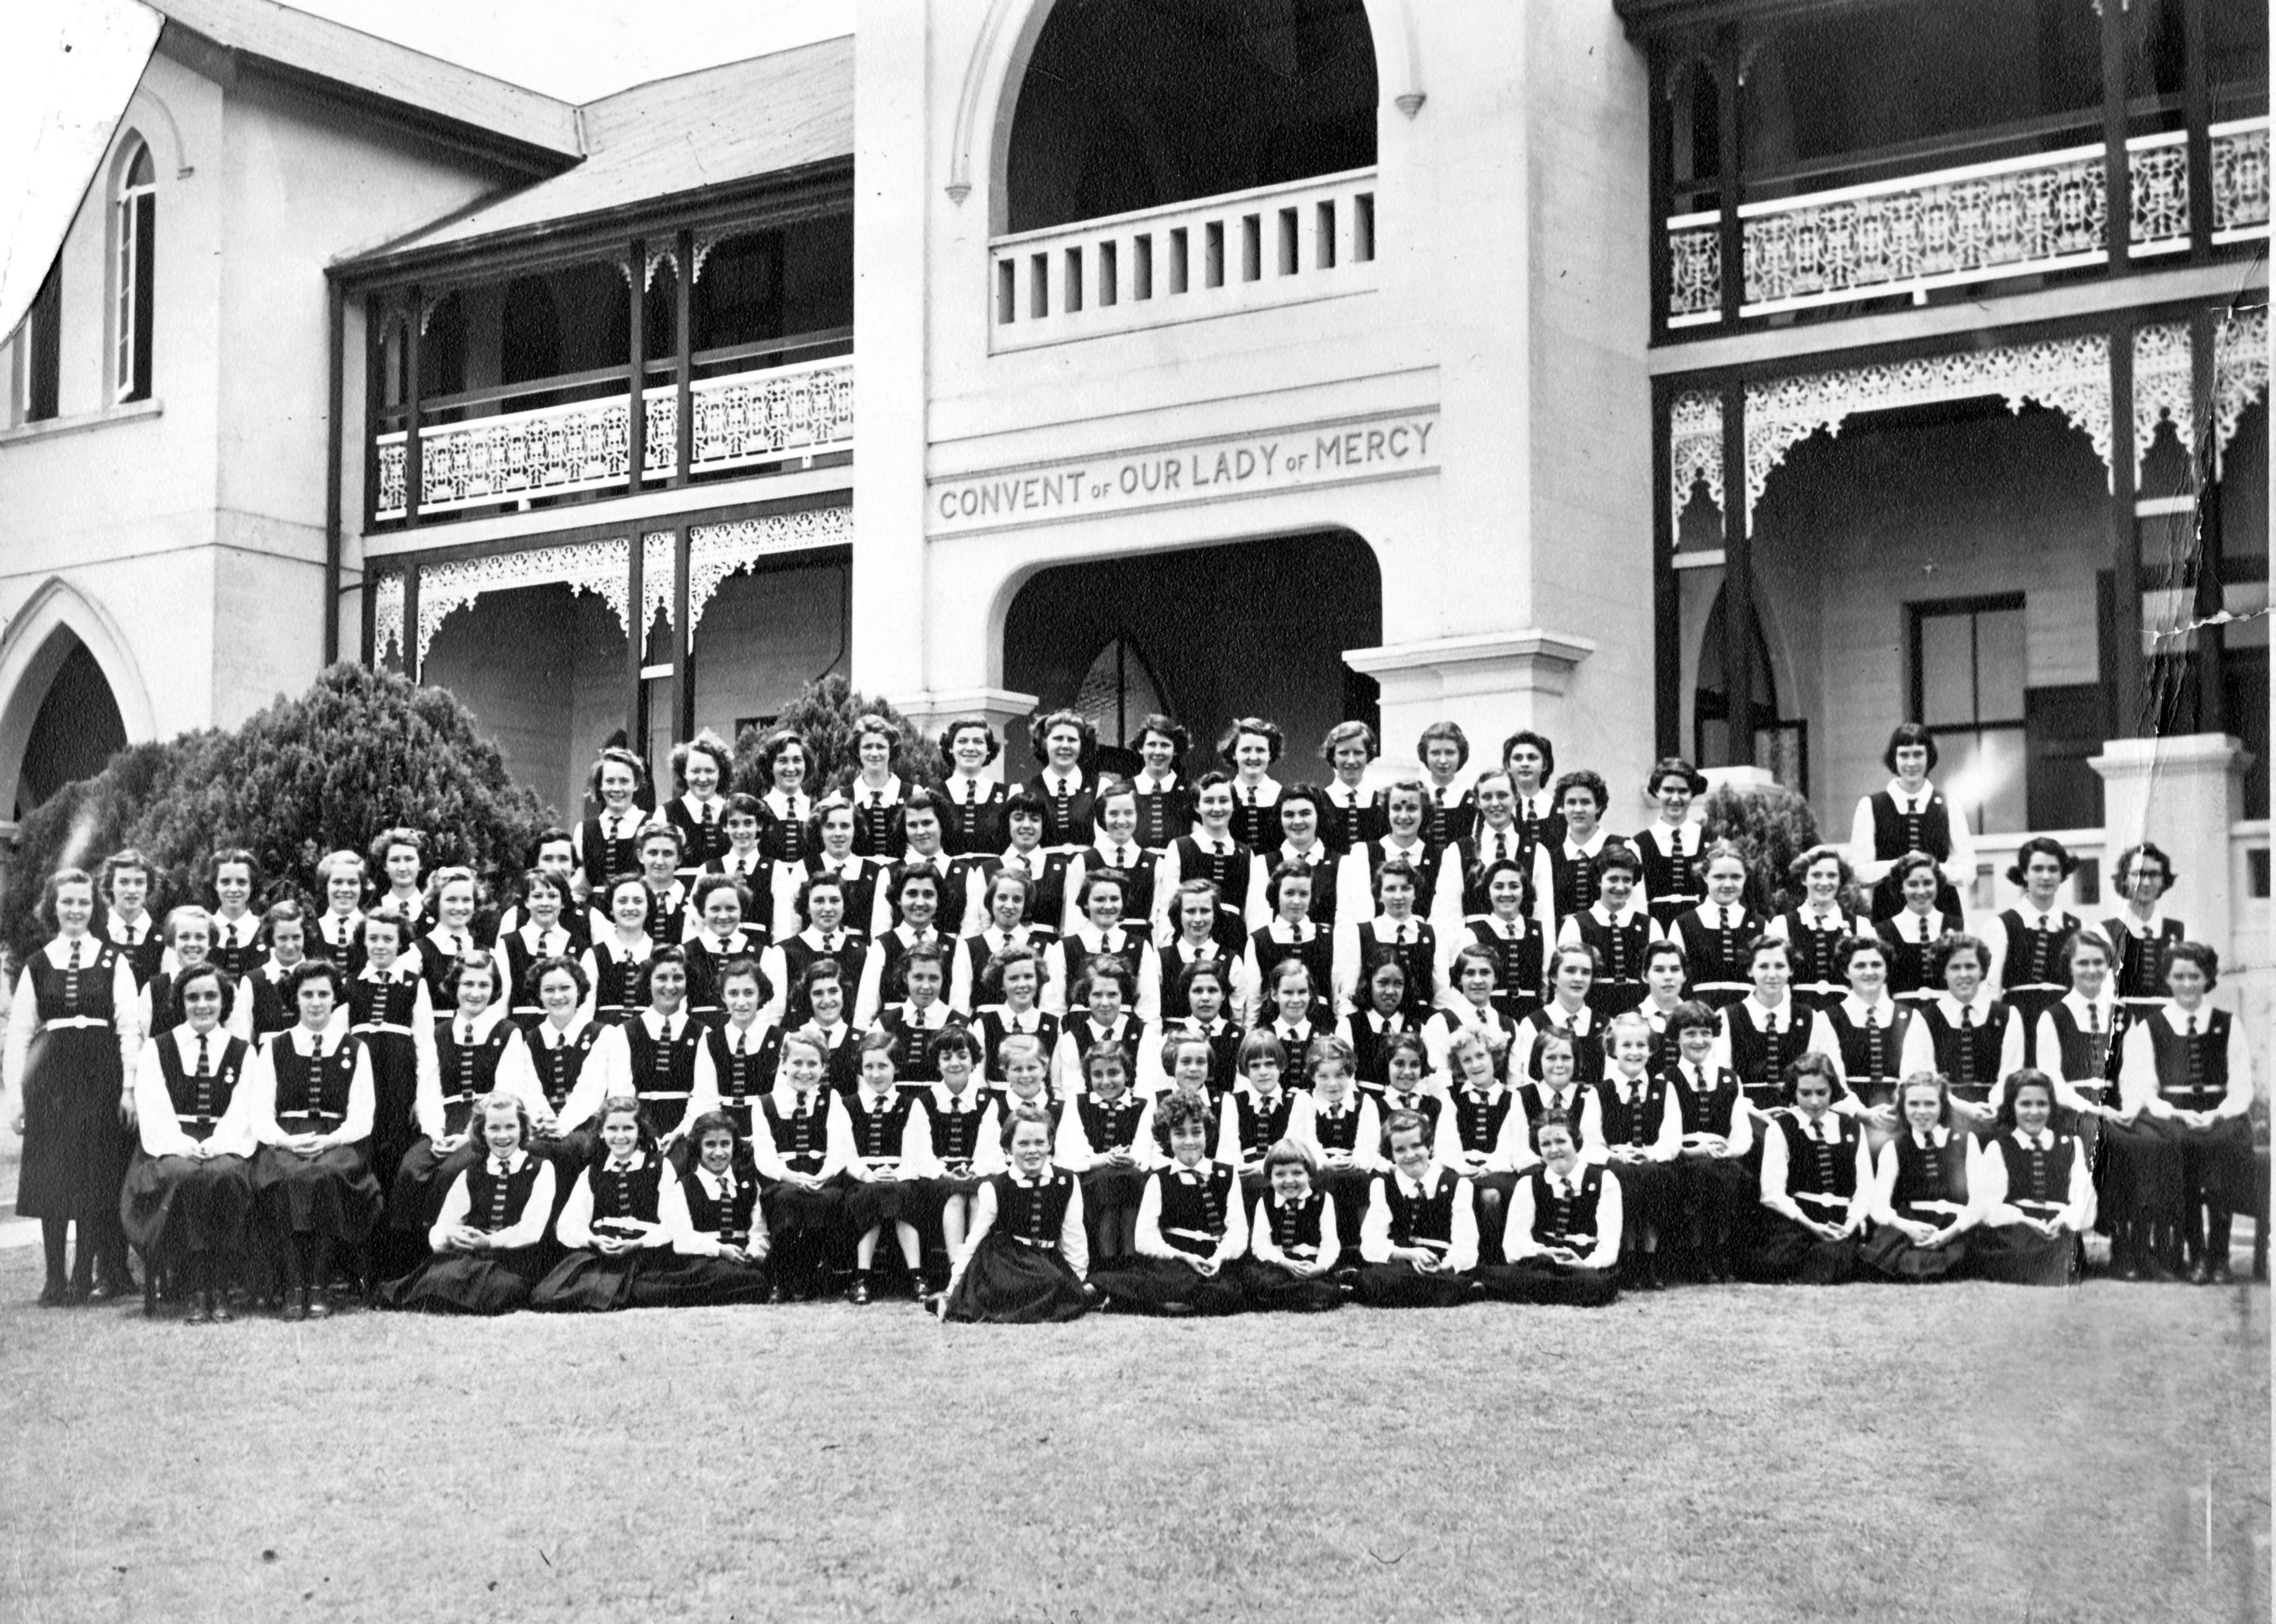 1950's School Group